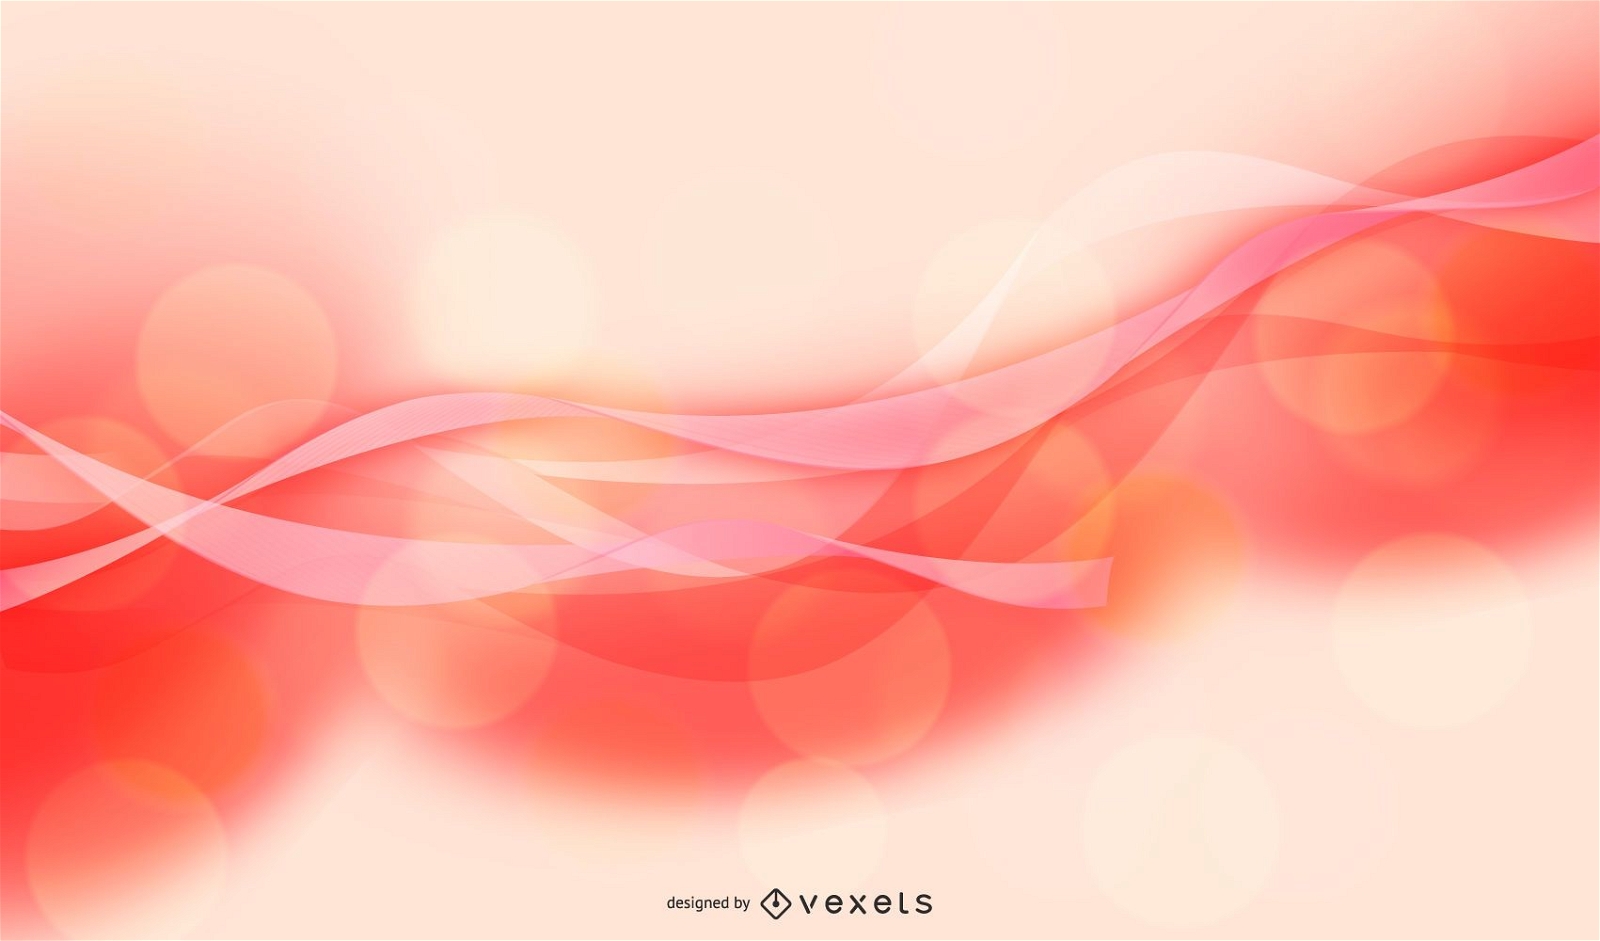 Diseño de fondo de onda rosa claro